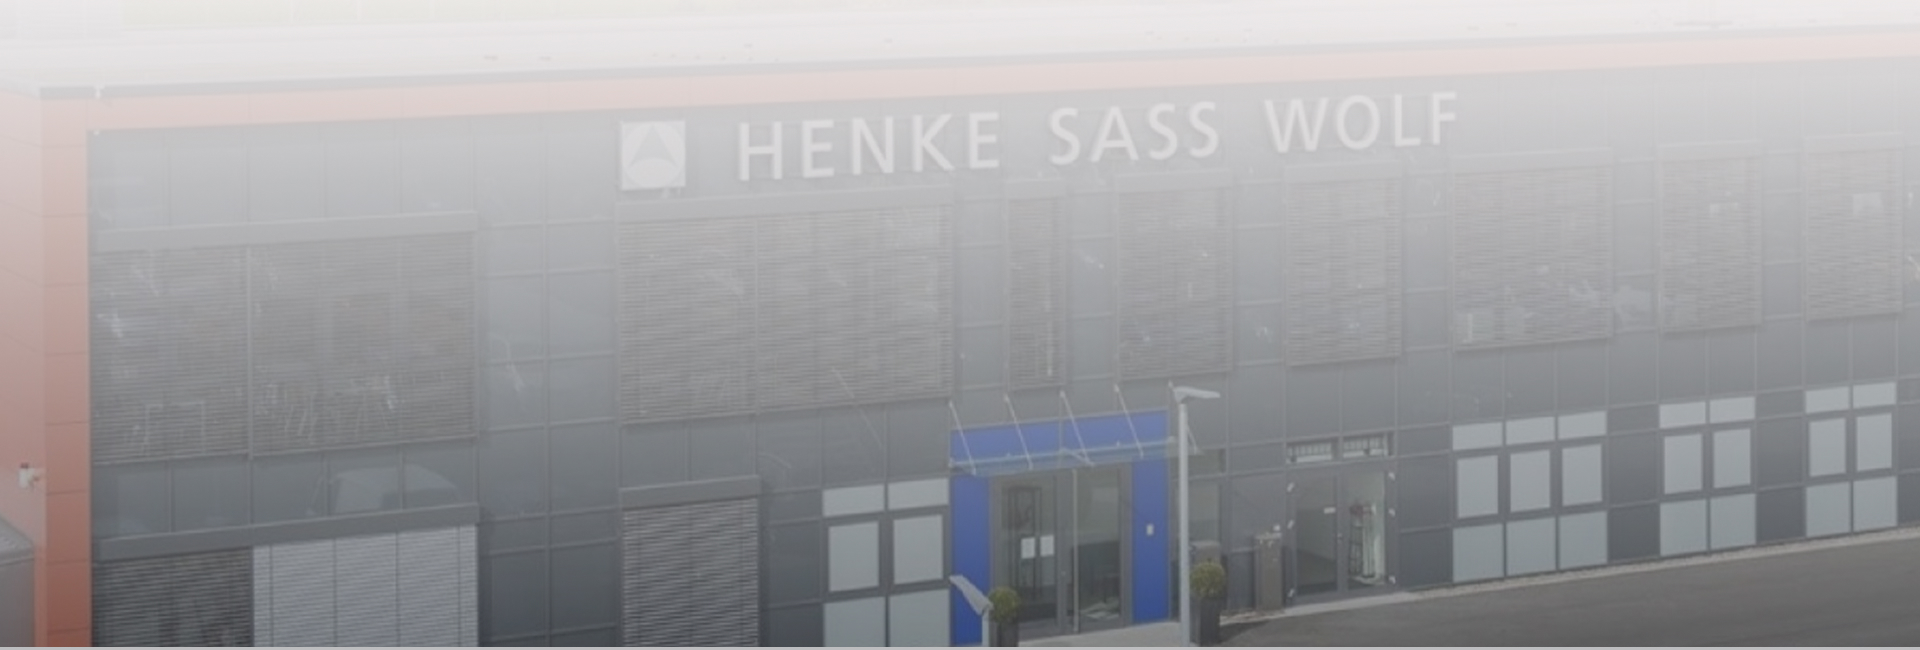 HENKE-SASS